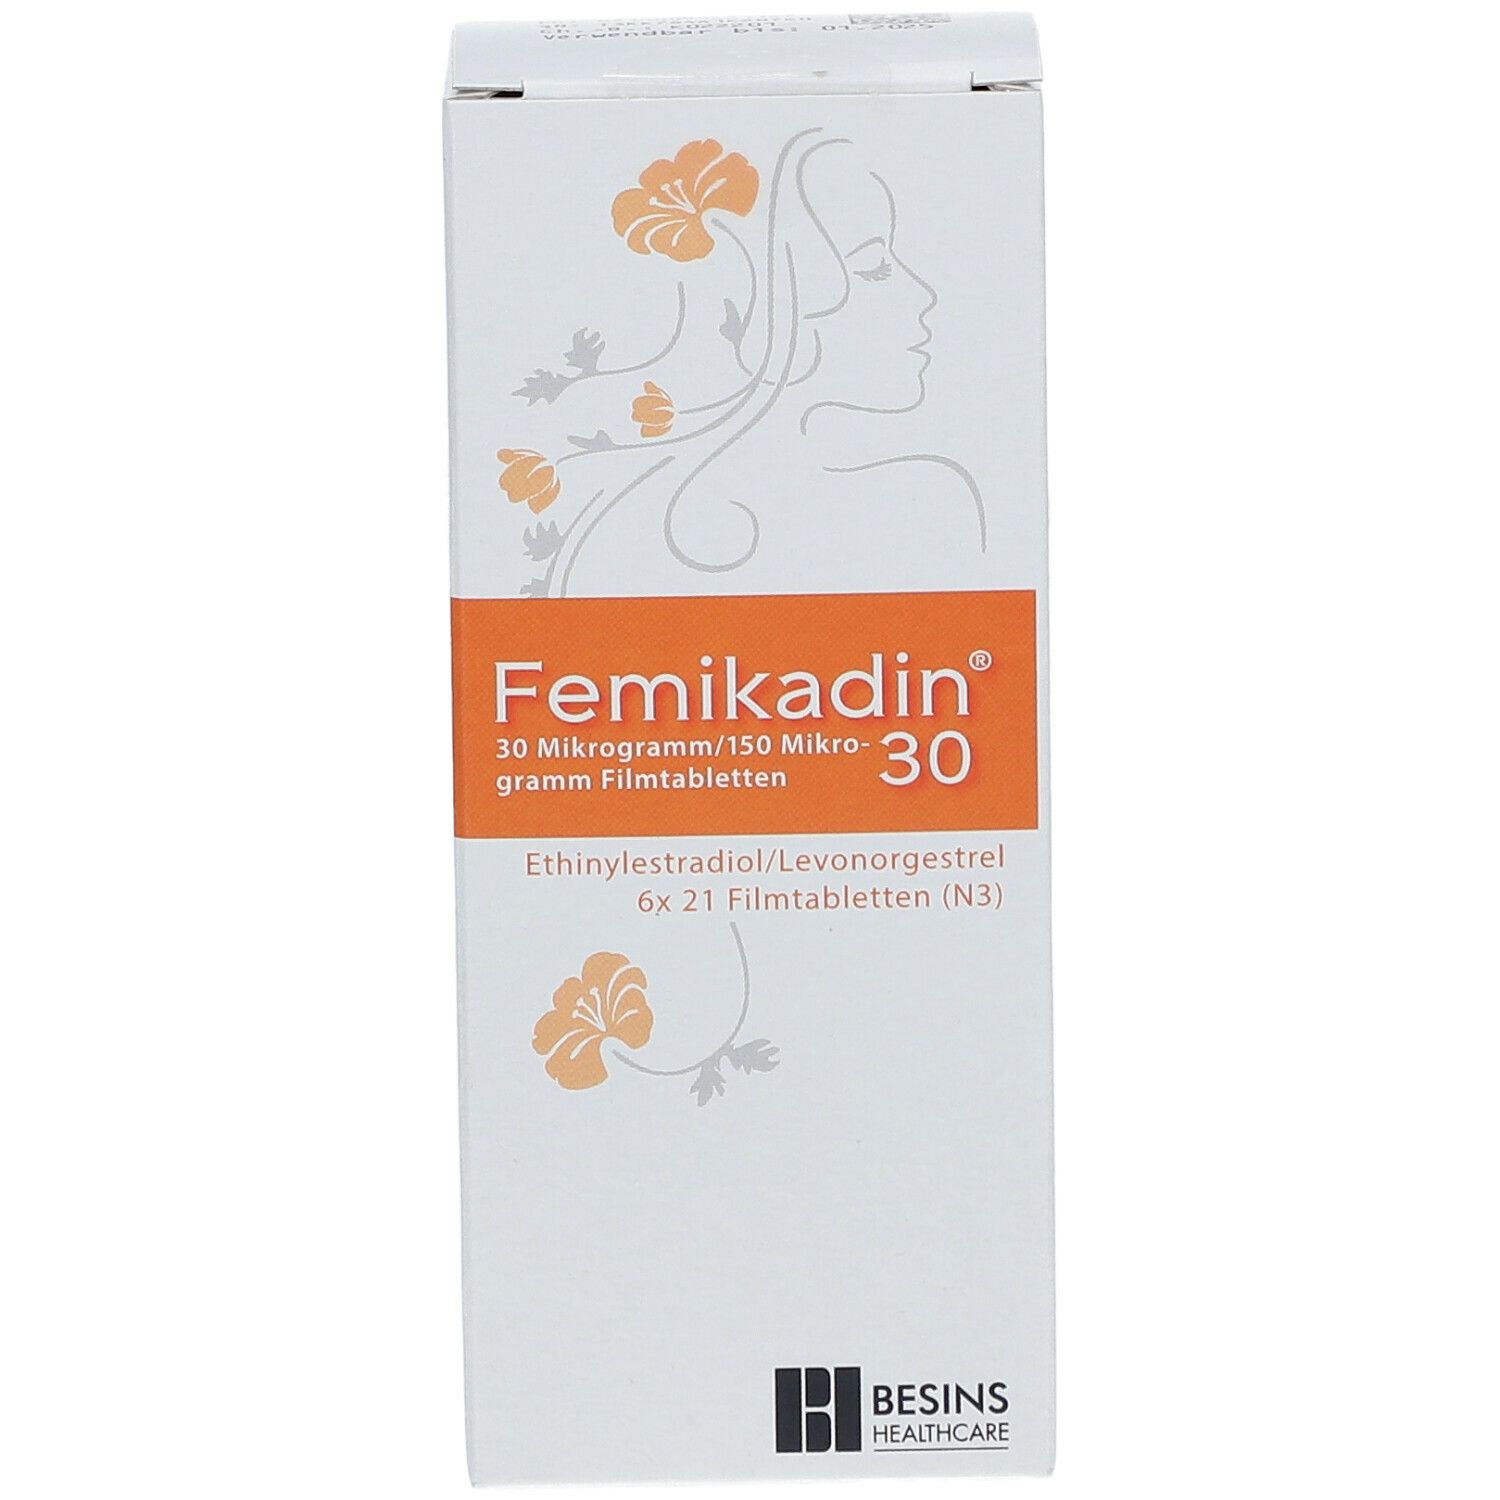 Femikadin® 30